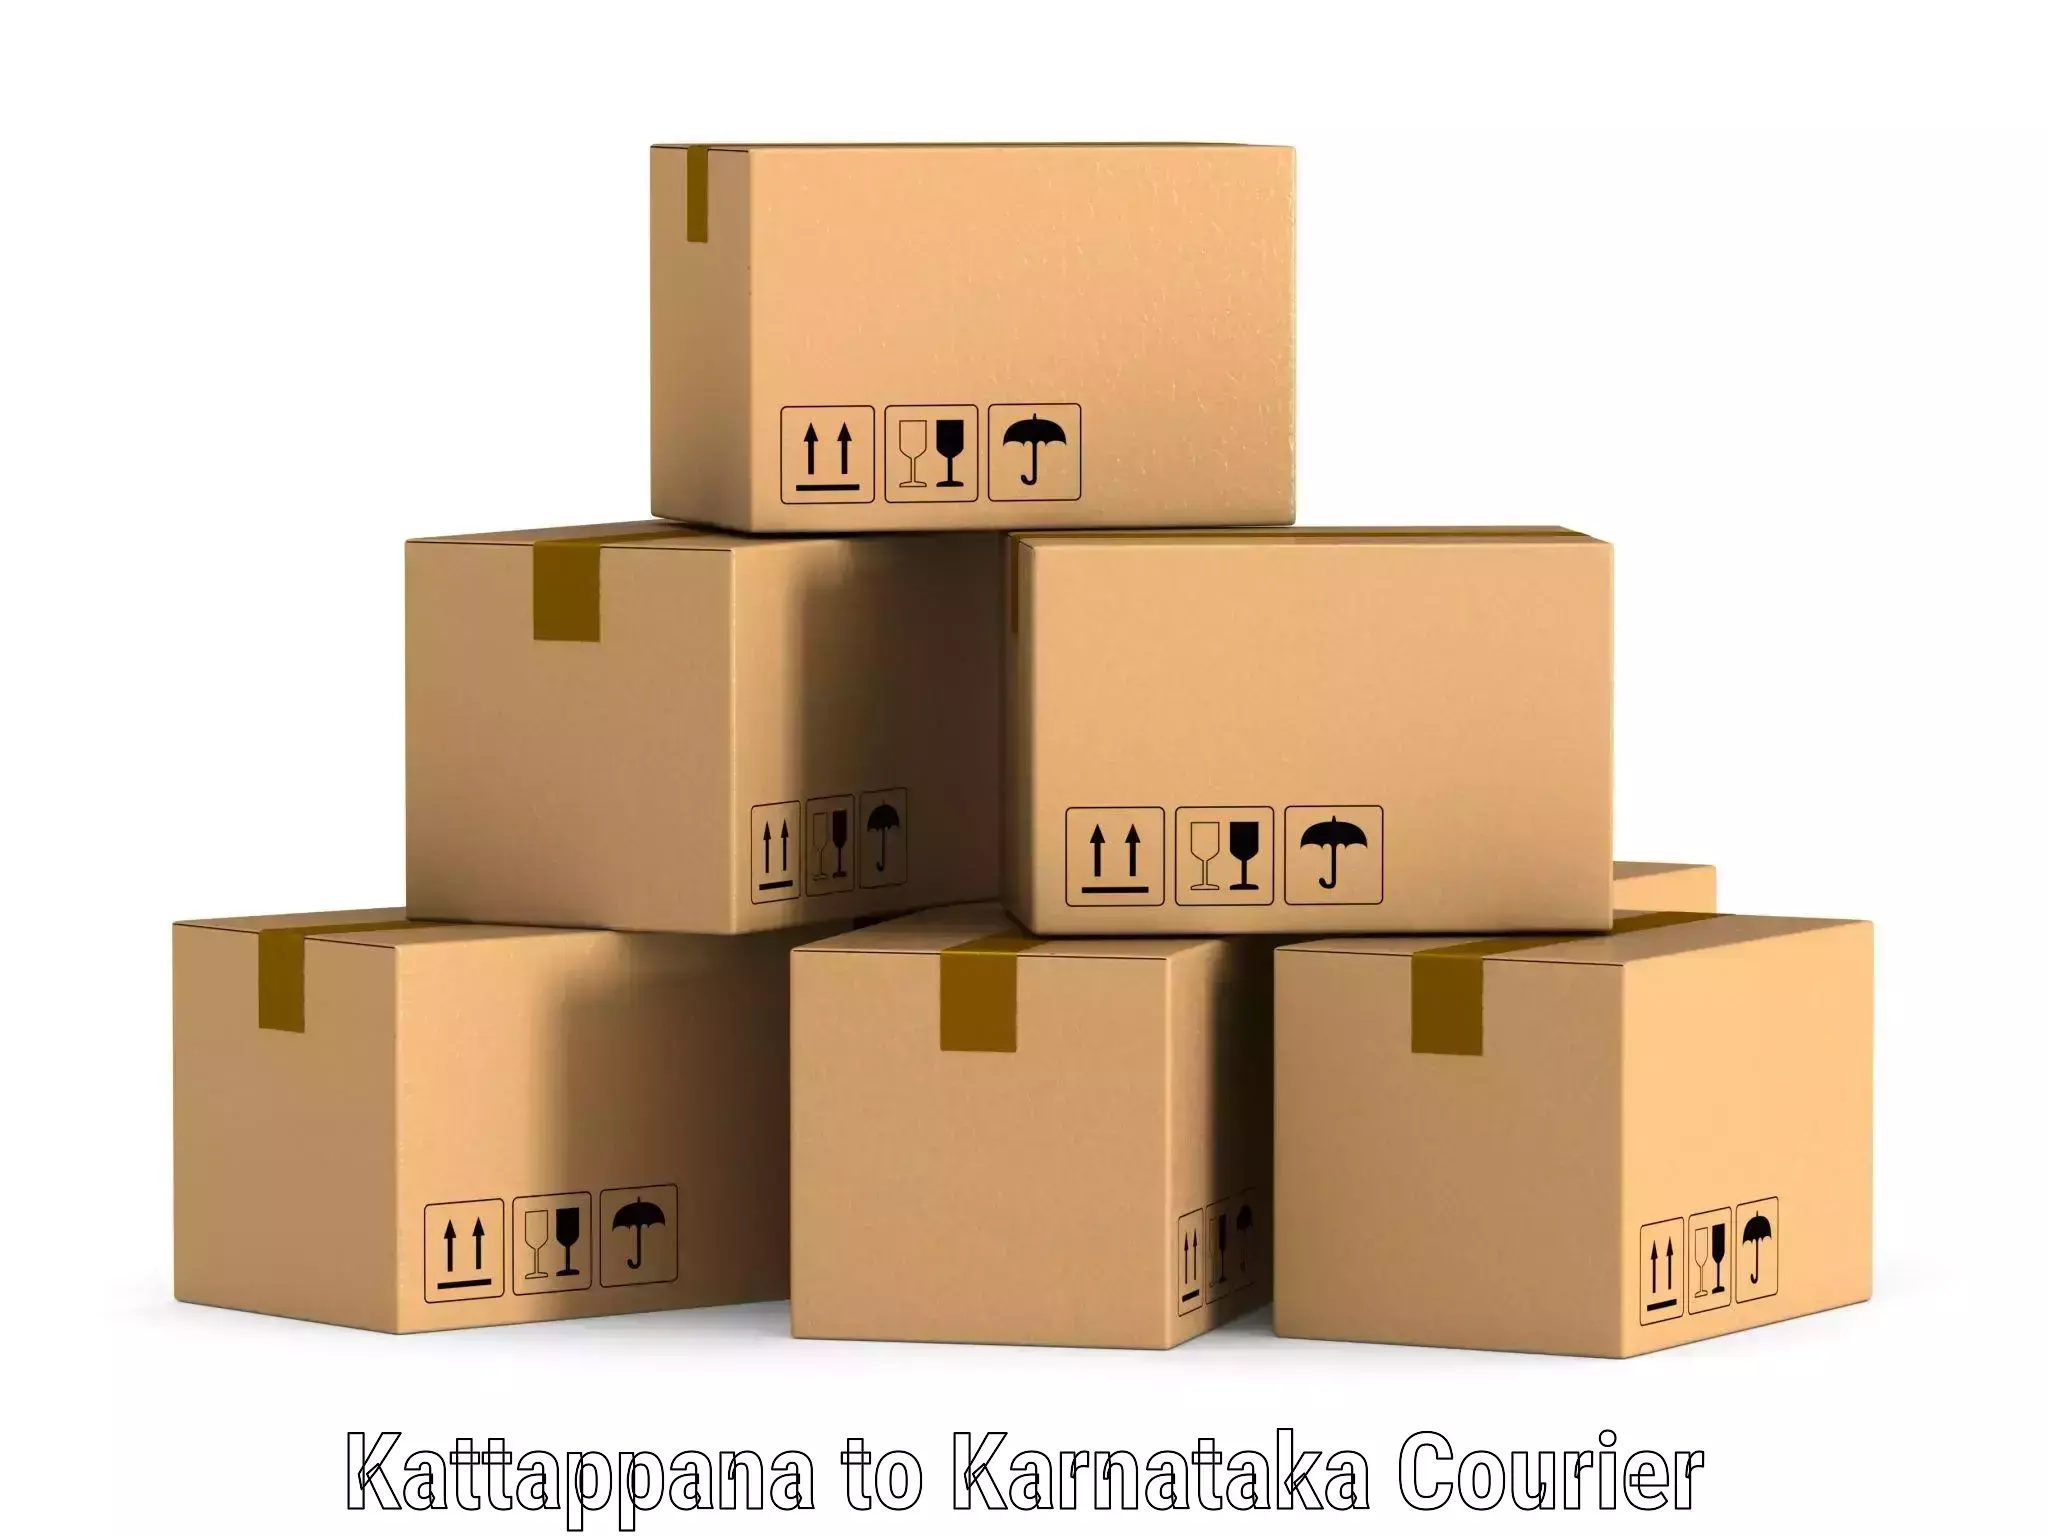 Supply chain efficiency Kattappana to Hosadurga